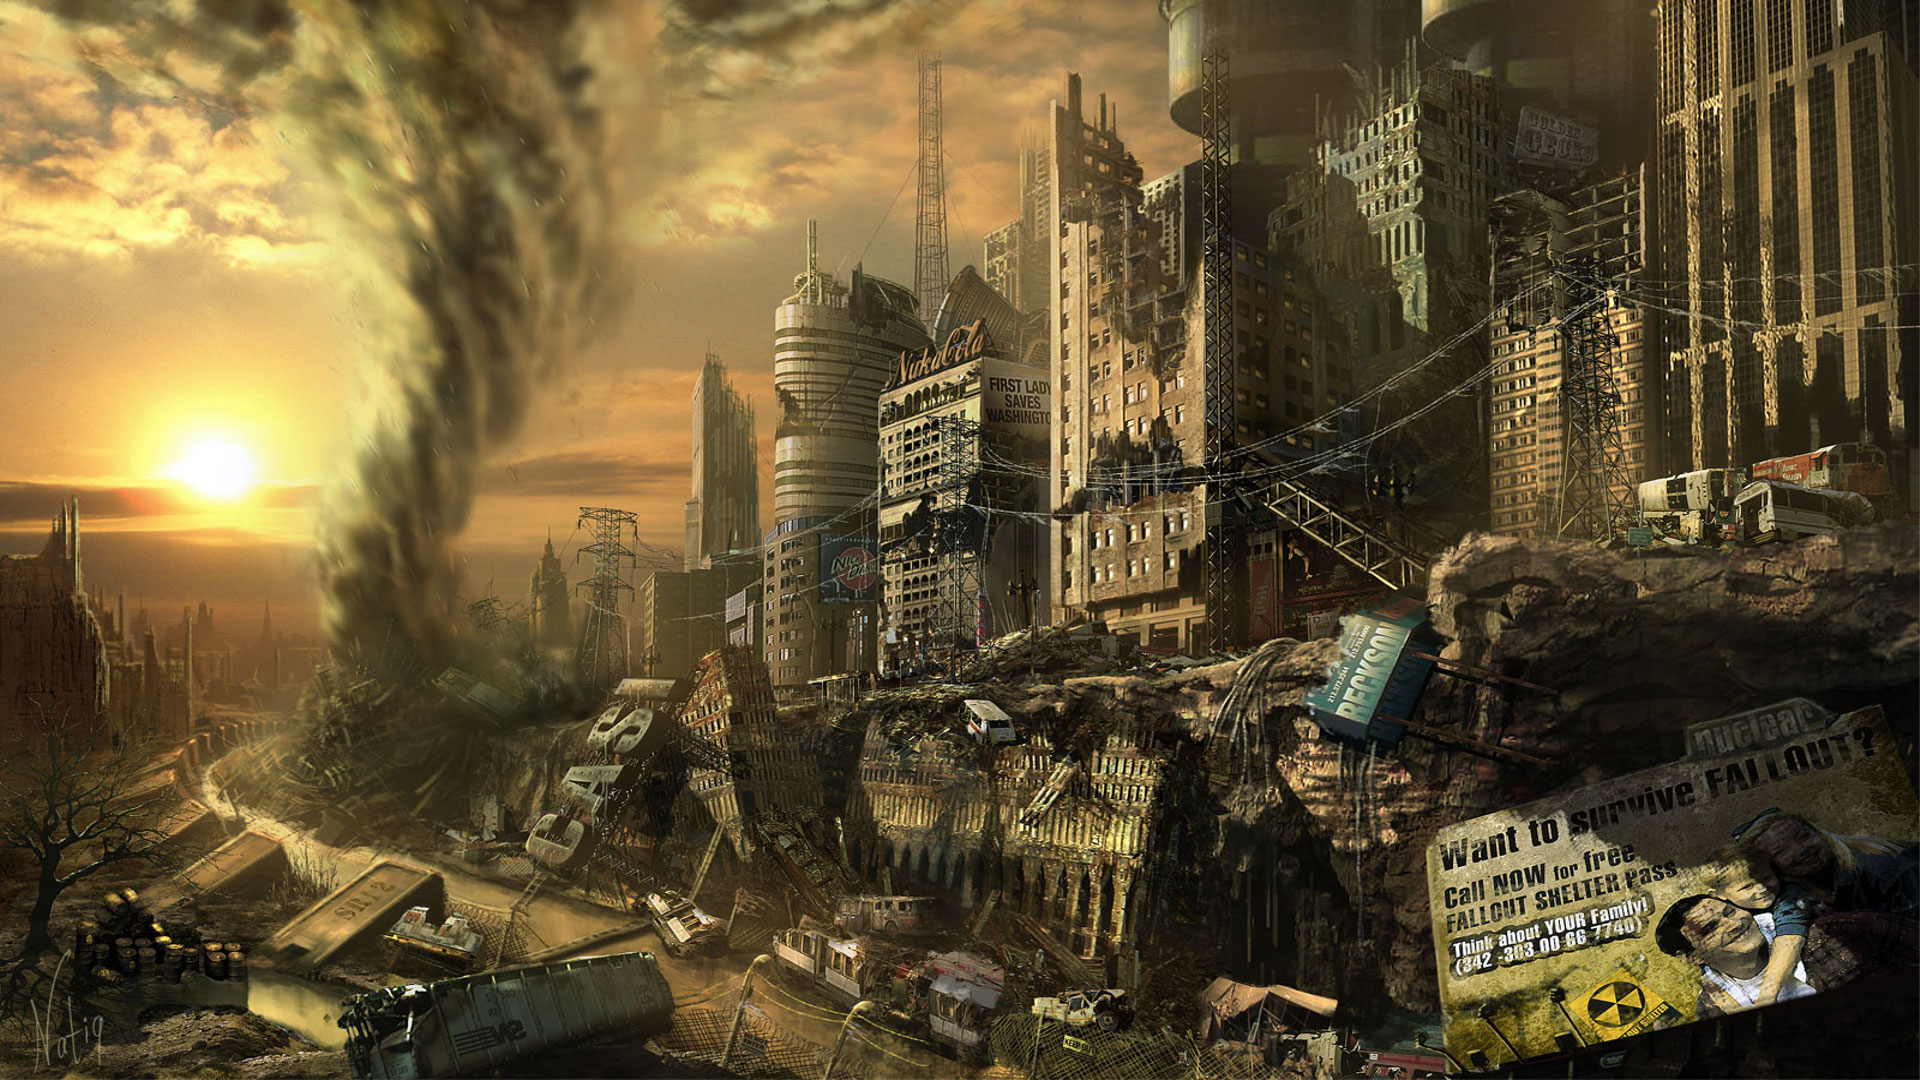 1080p Wallpaper Widescreen Fallout Res